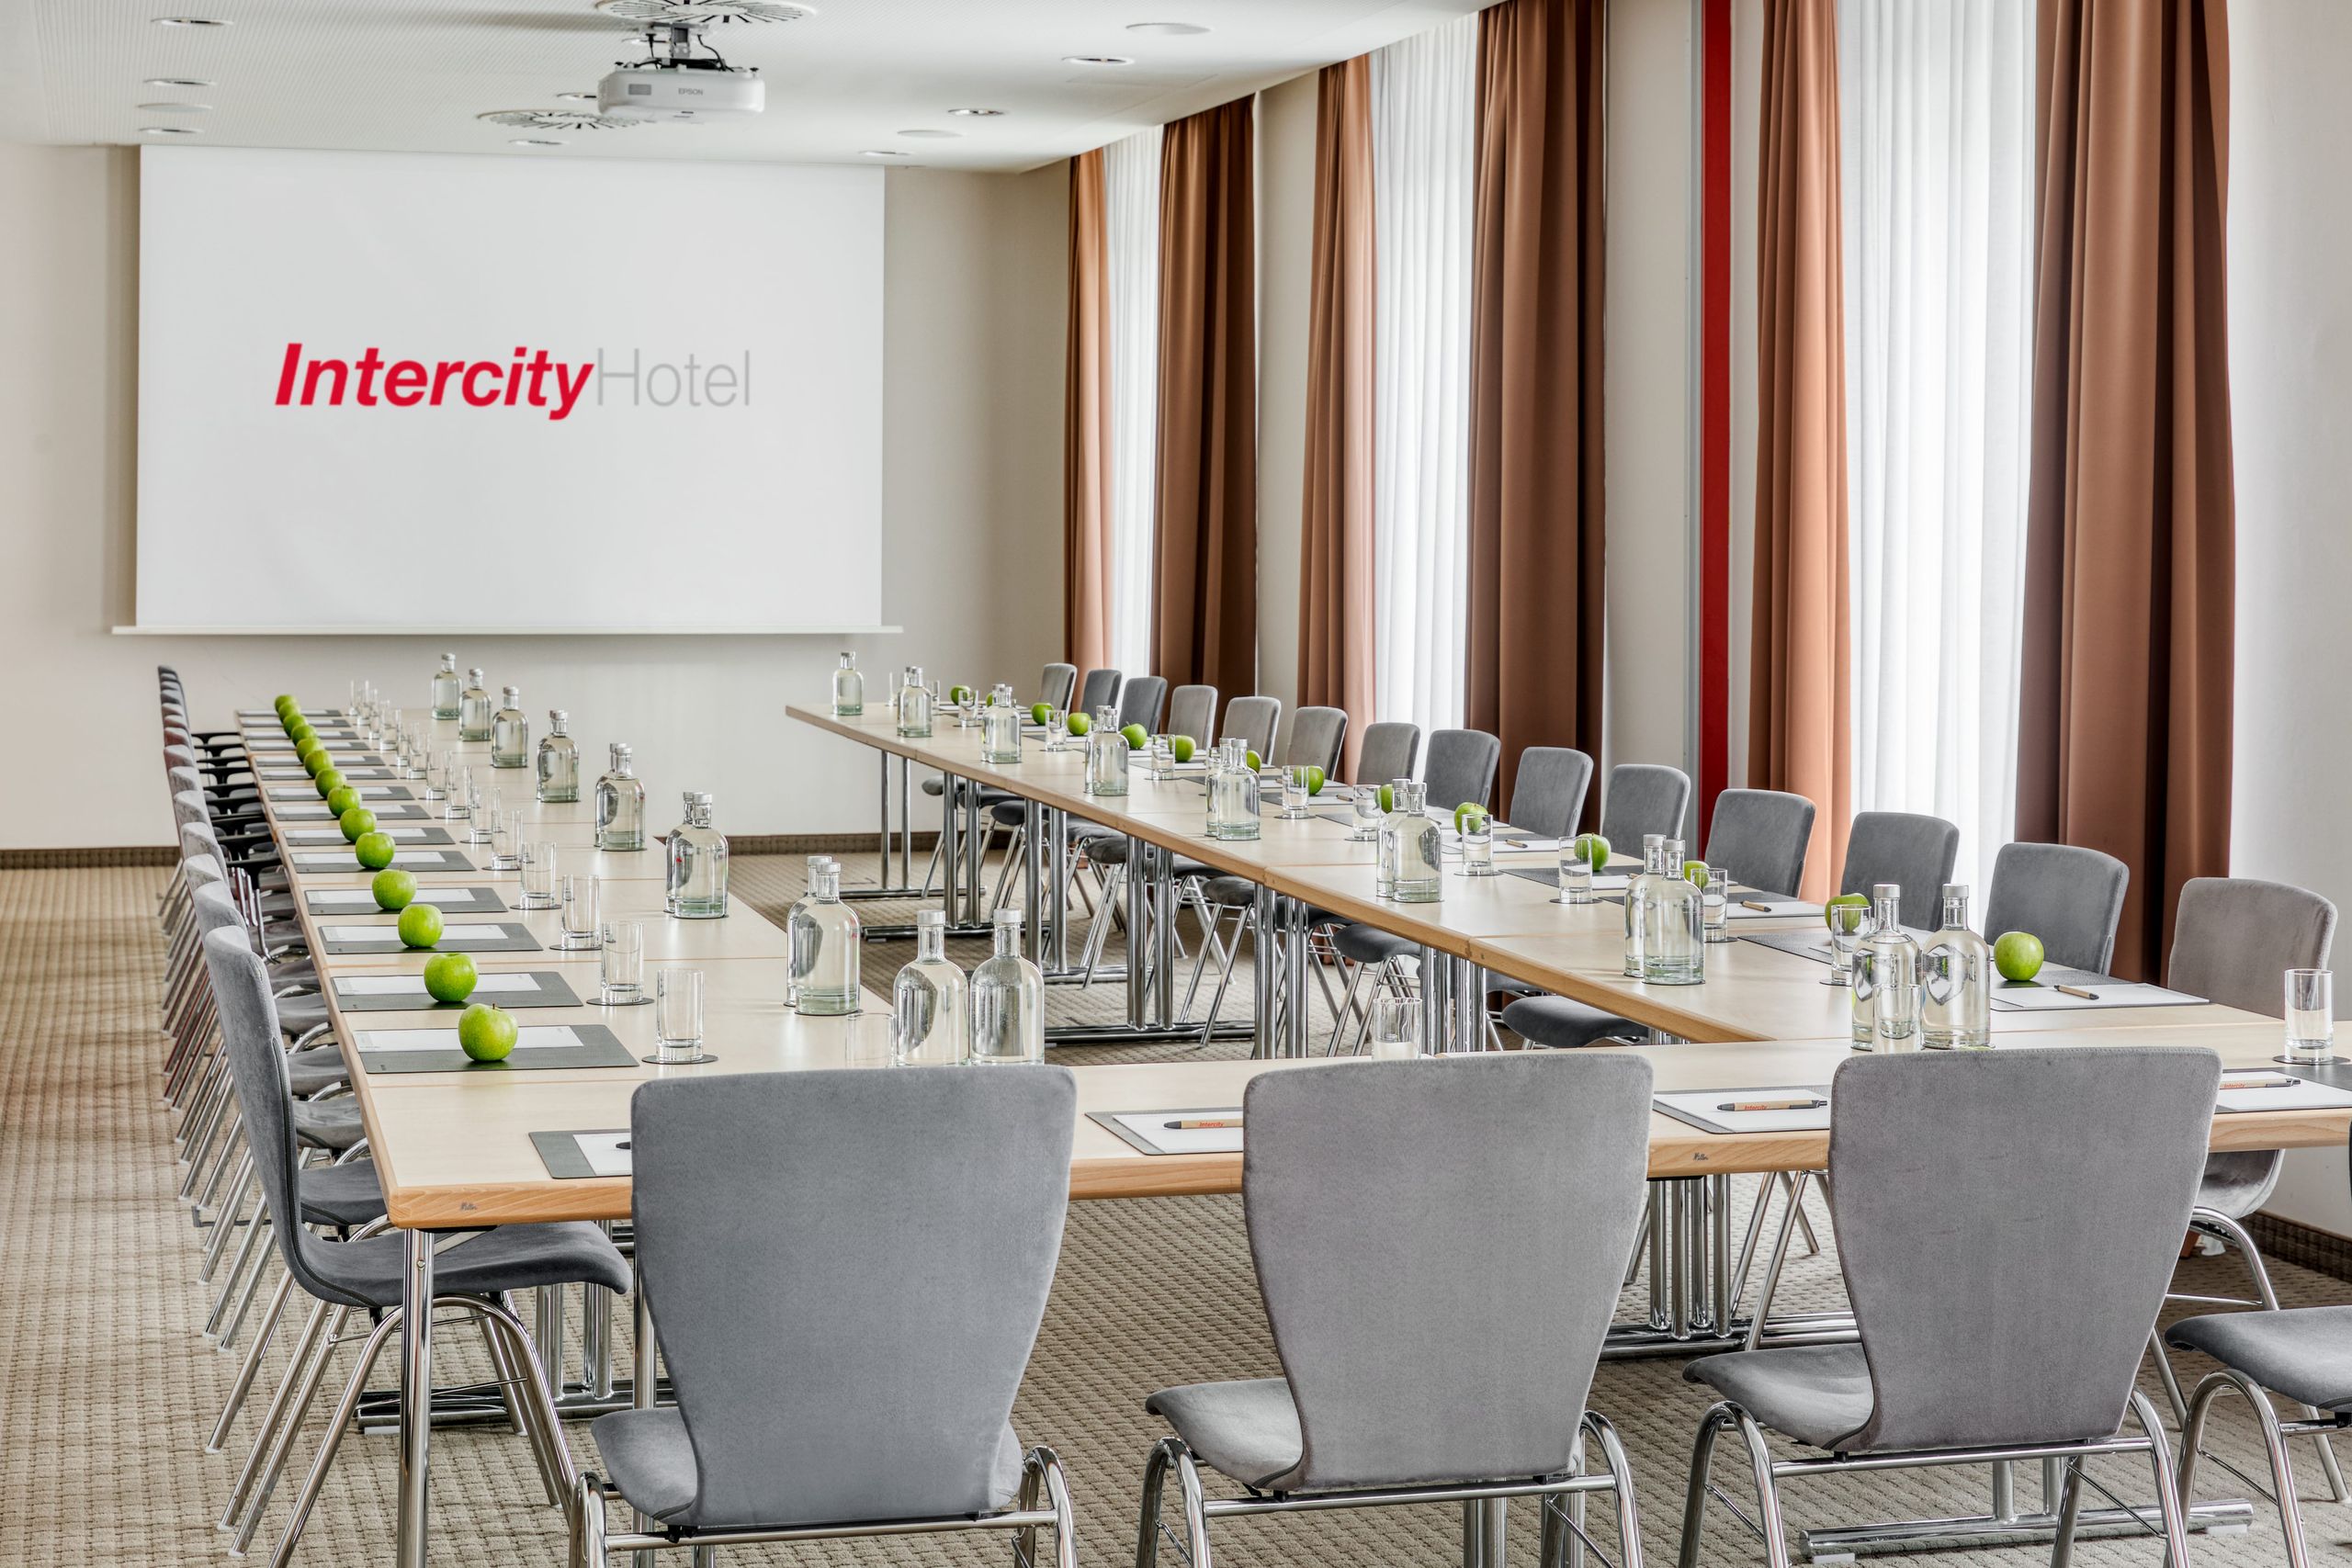 IntercityHotel Nürnberg - meeting